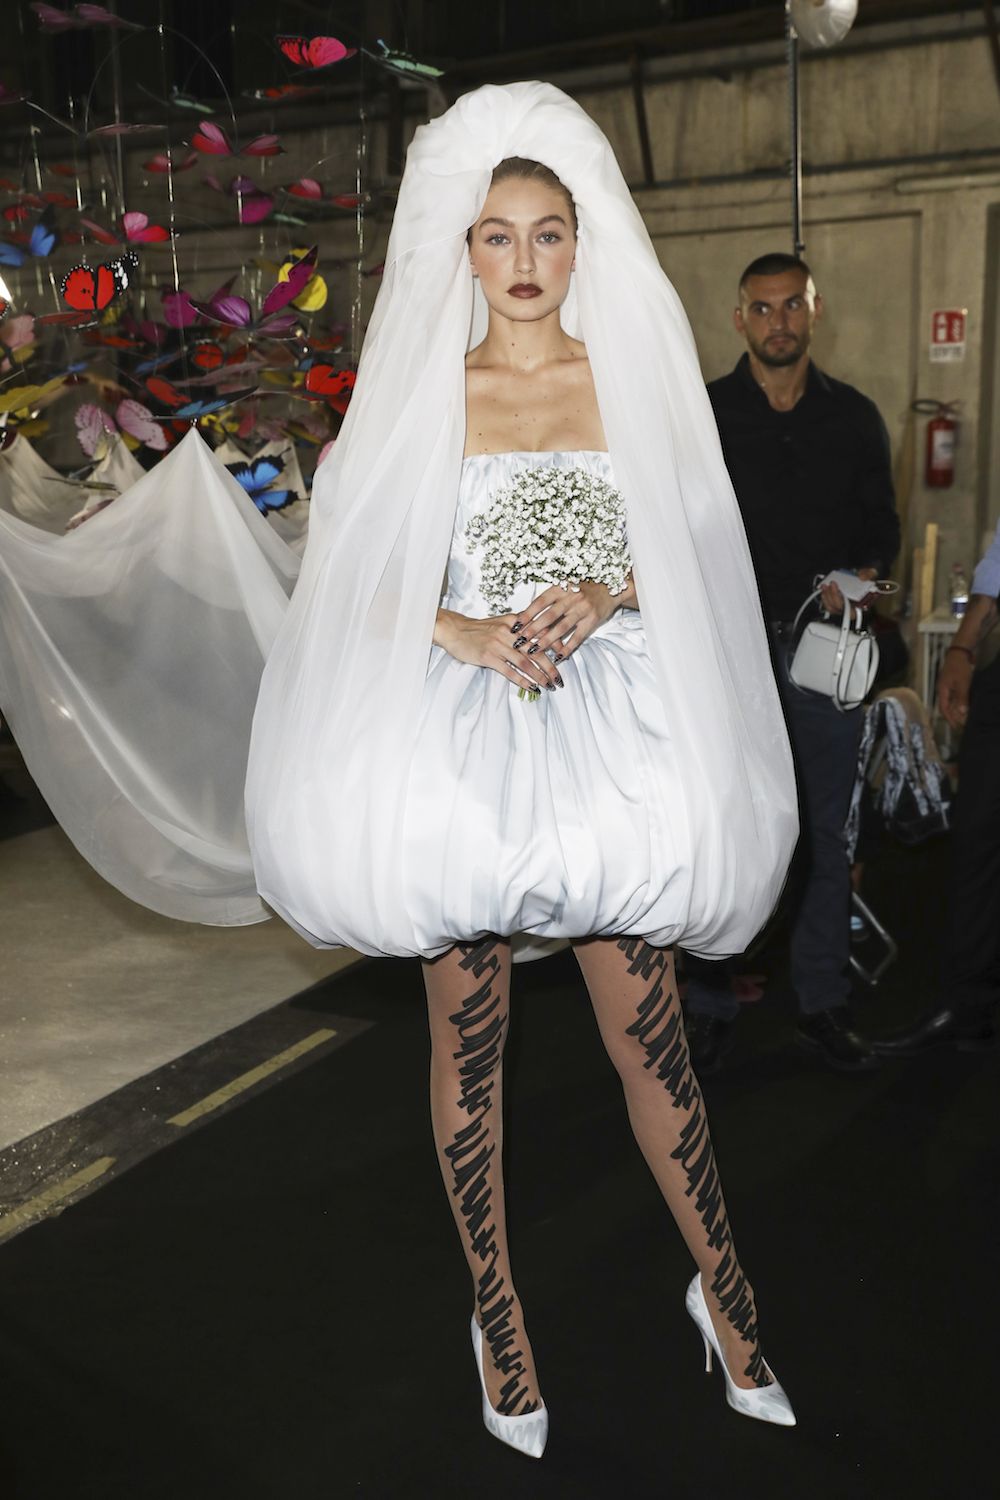 Gigi Hadid's Bizarre Wedding Dress Will 